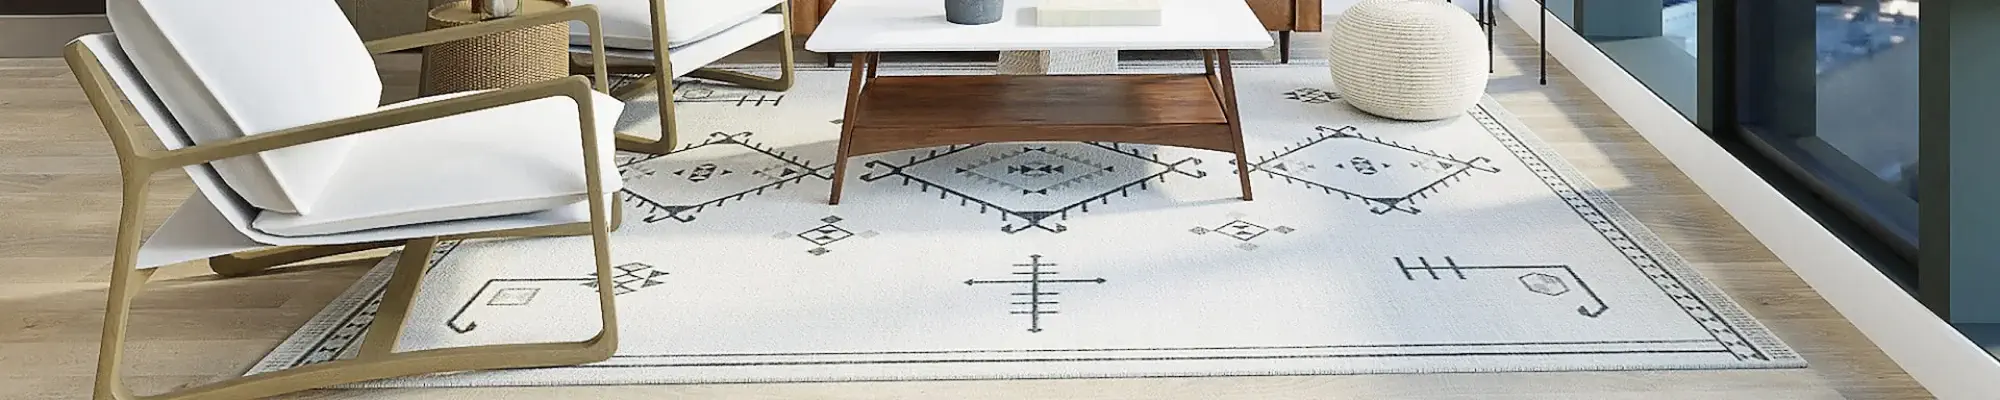 Project photos from Bridgeport Carpet, hardwood & Tile in Alpharetta, GA to inspire your design